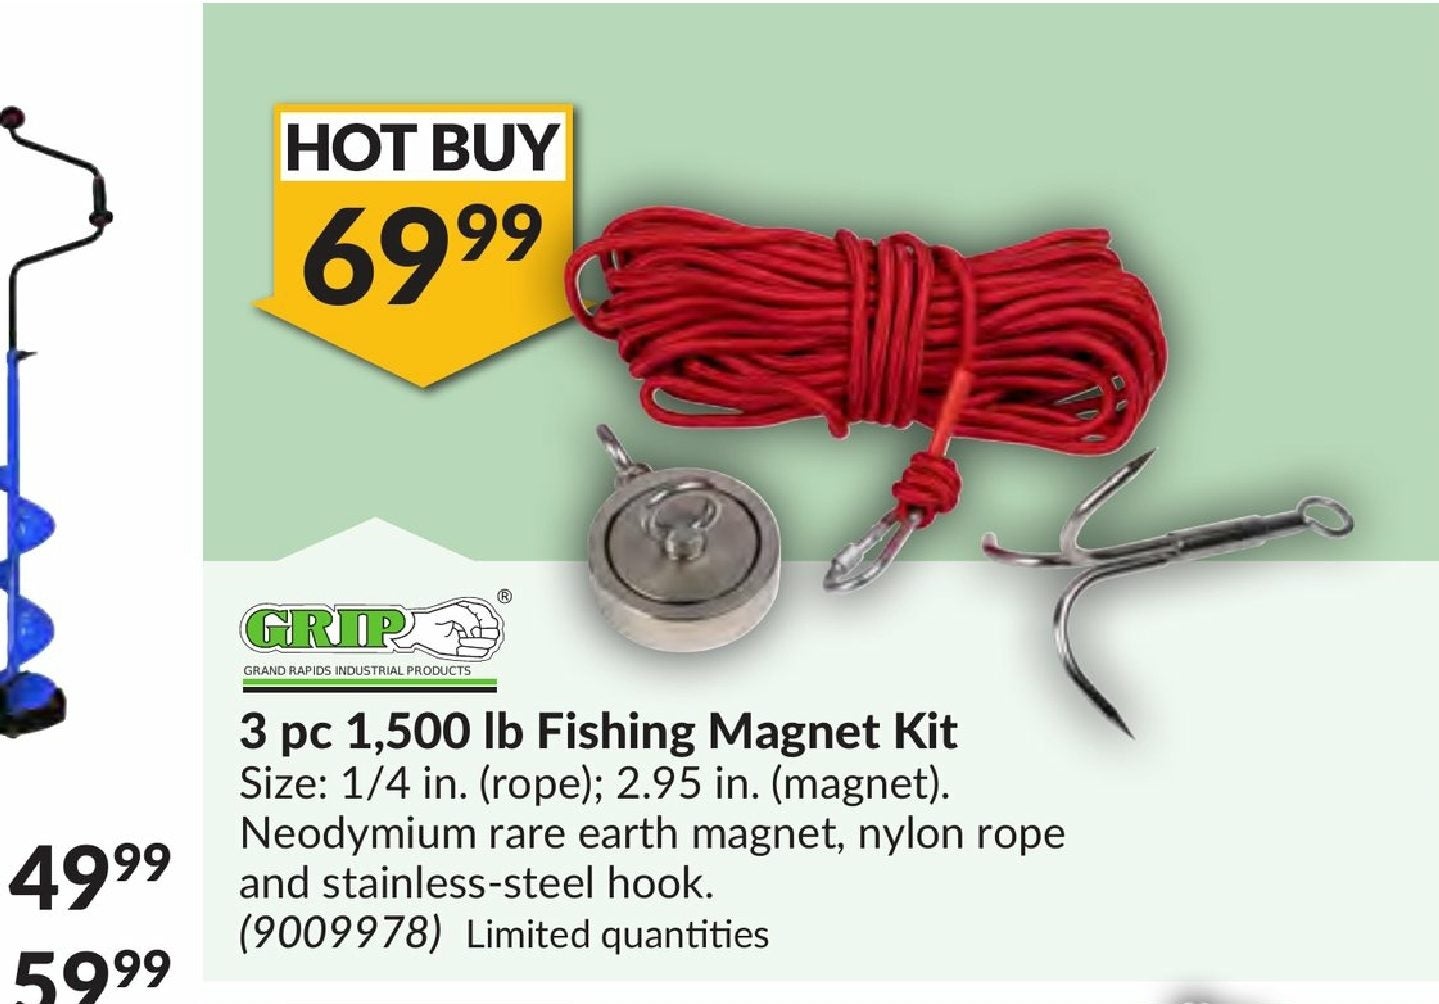 Princess Auto] Magnet Fishing Kit 1500lbs - $69.99 - RedFlagDeals.com Forums